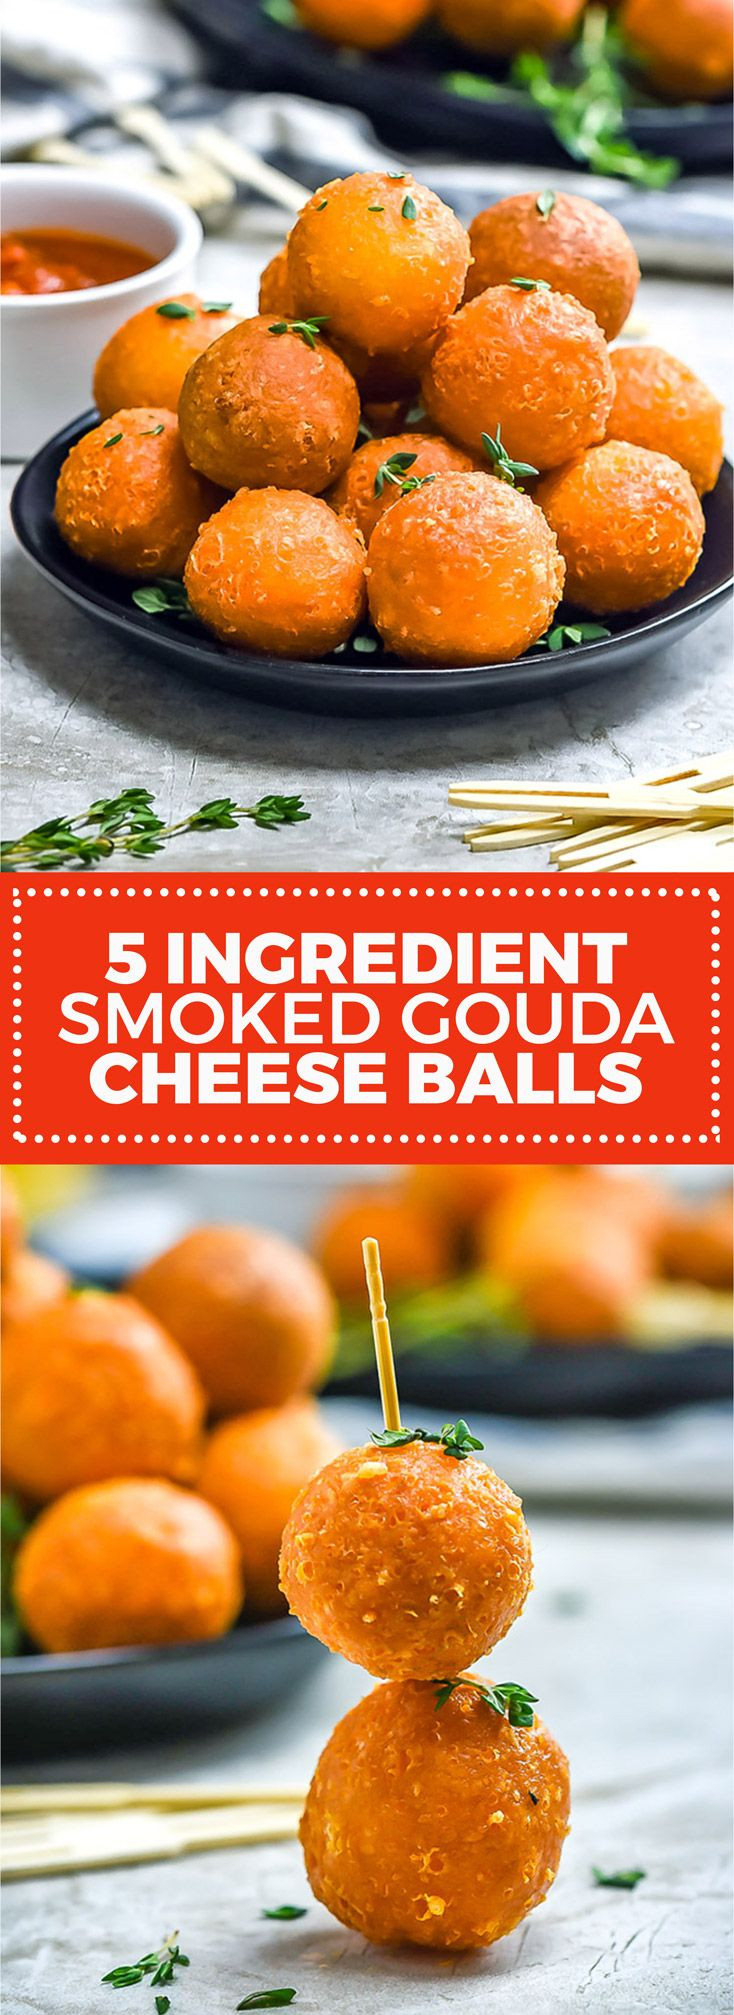 Gouda Cheese Appetizers
 5 Ingre nt Crispy Smoked Gouda Cheese Balls